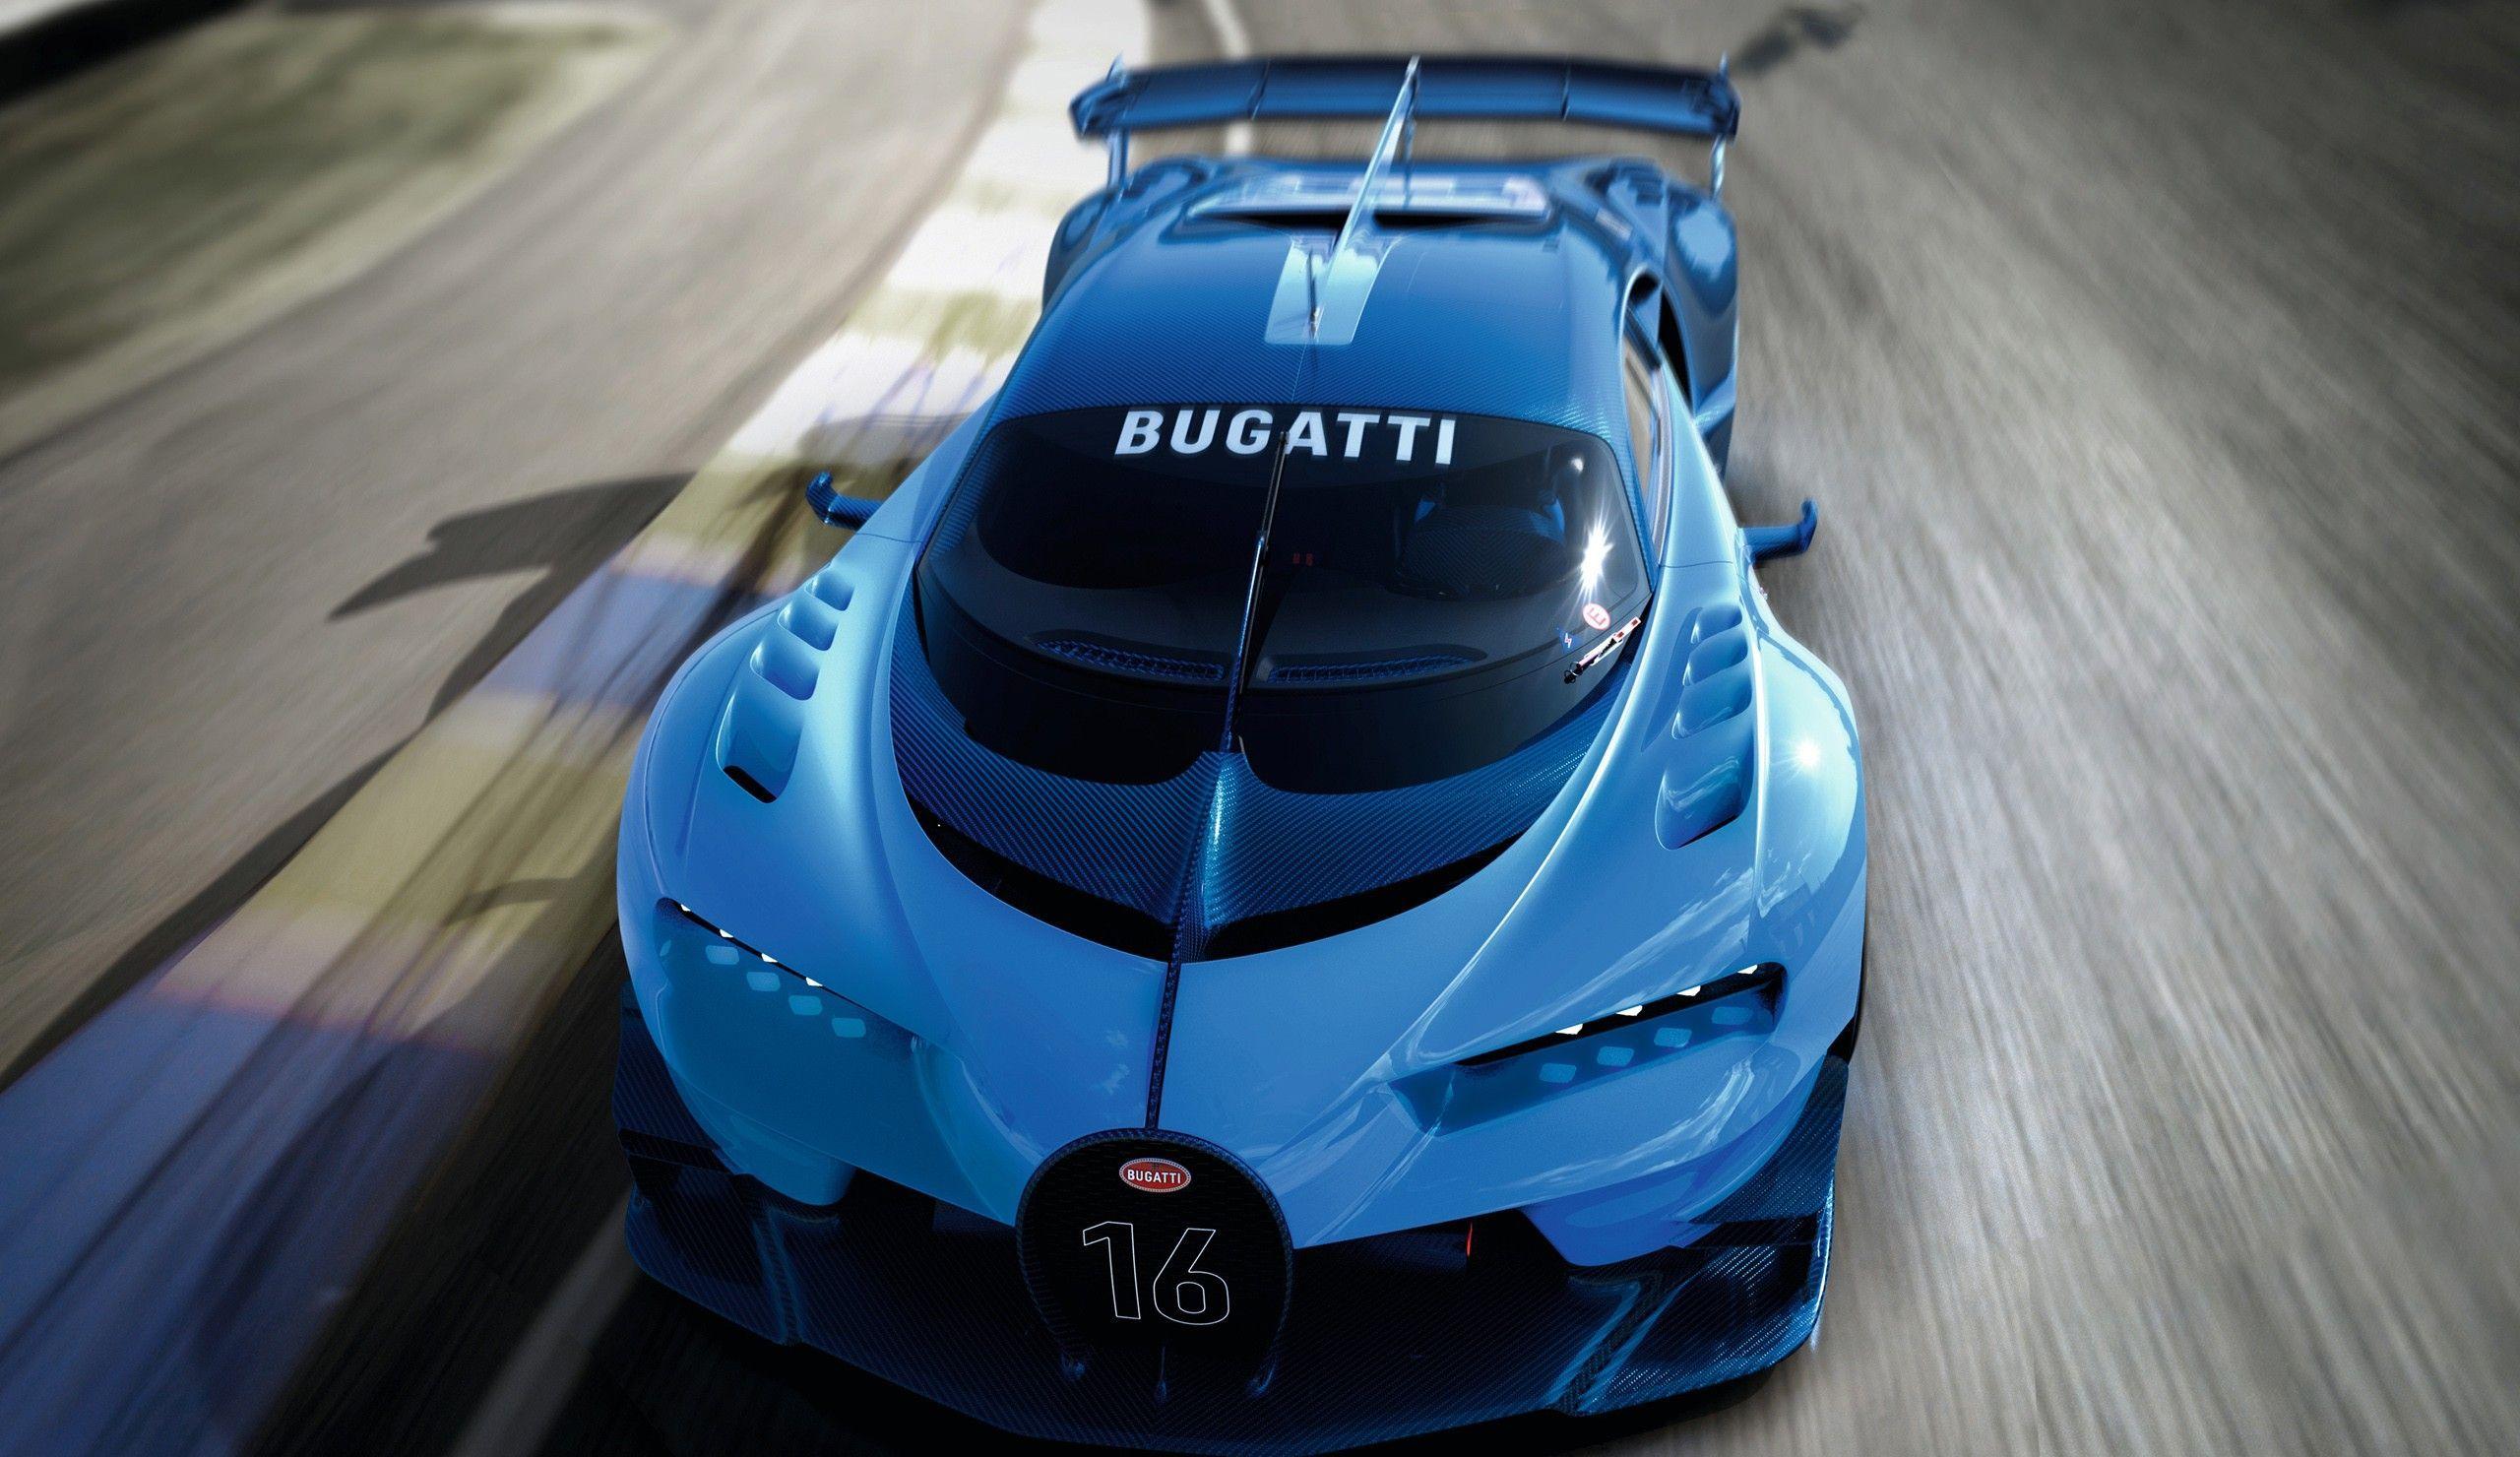 Cool Bugatti Wallpapers - Top Free Cool Bugatti Backgrounds